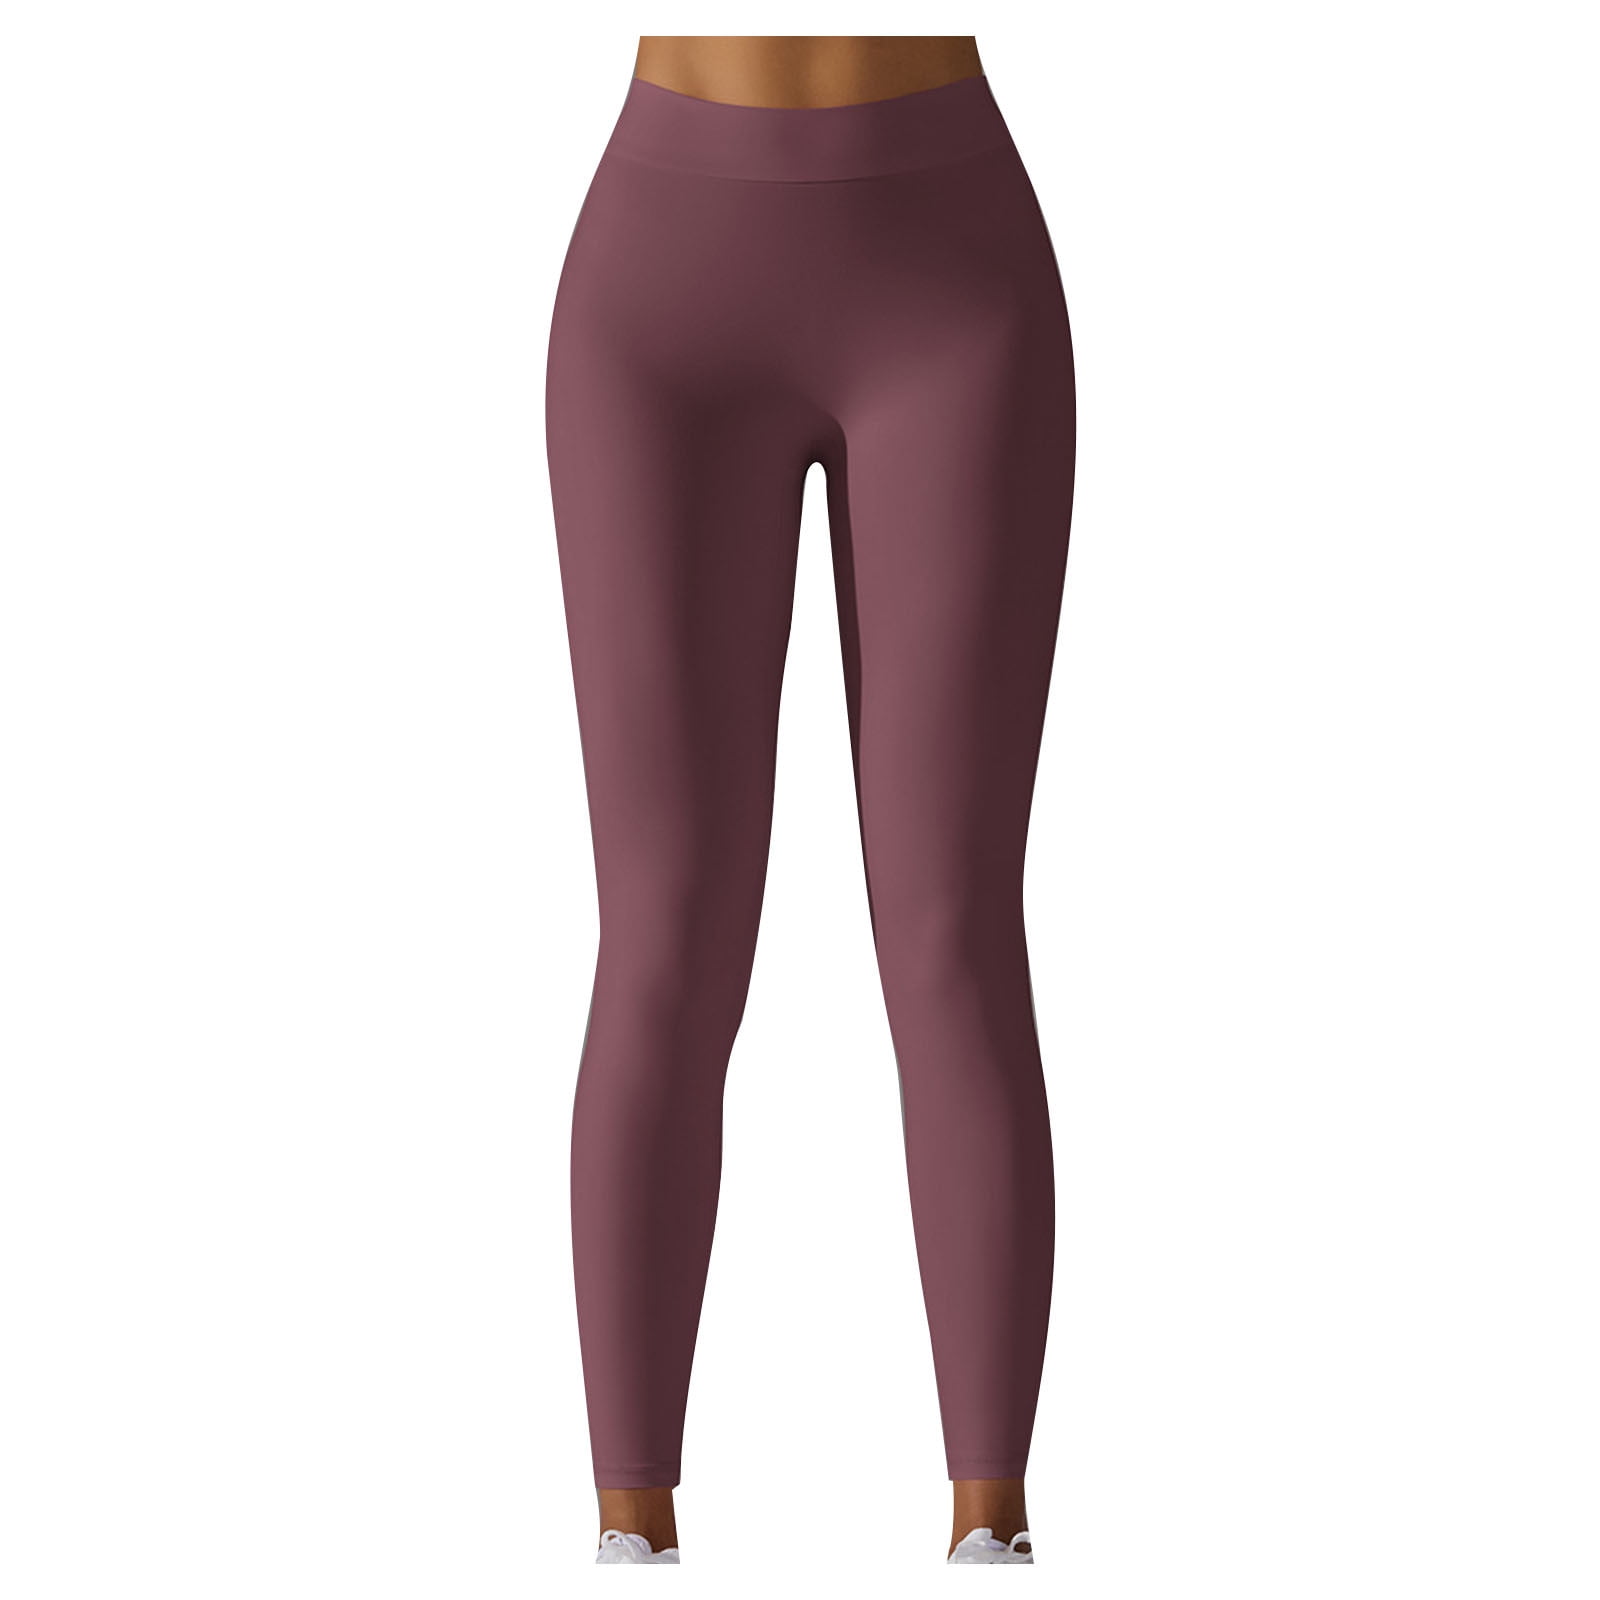 Glutex spandex high waist leggings - ALLRJ  Digital print leggings, Women  high waist pants, Printed leggings